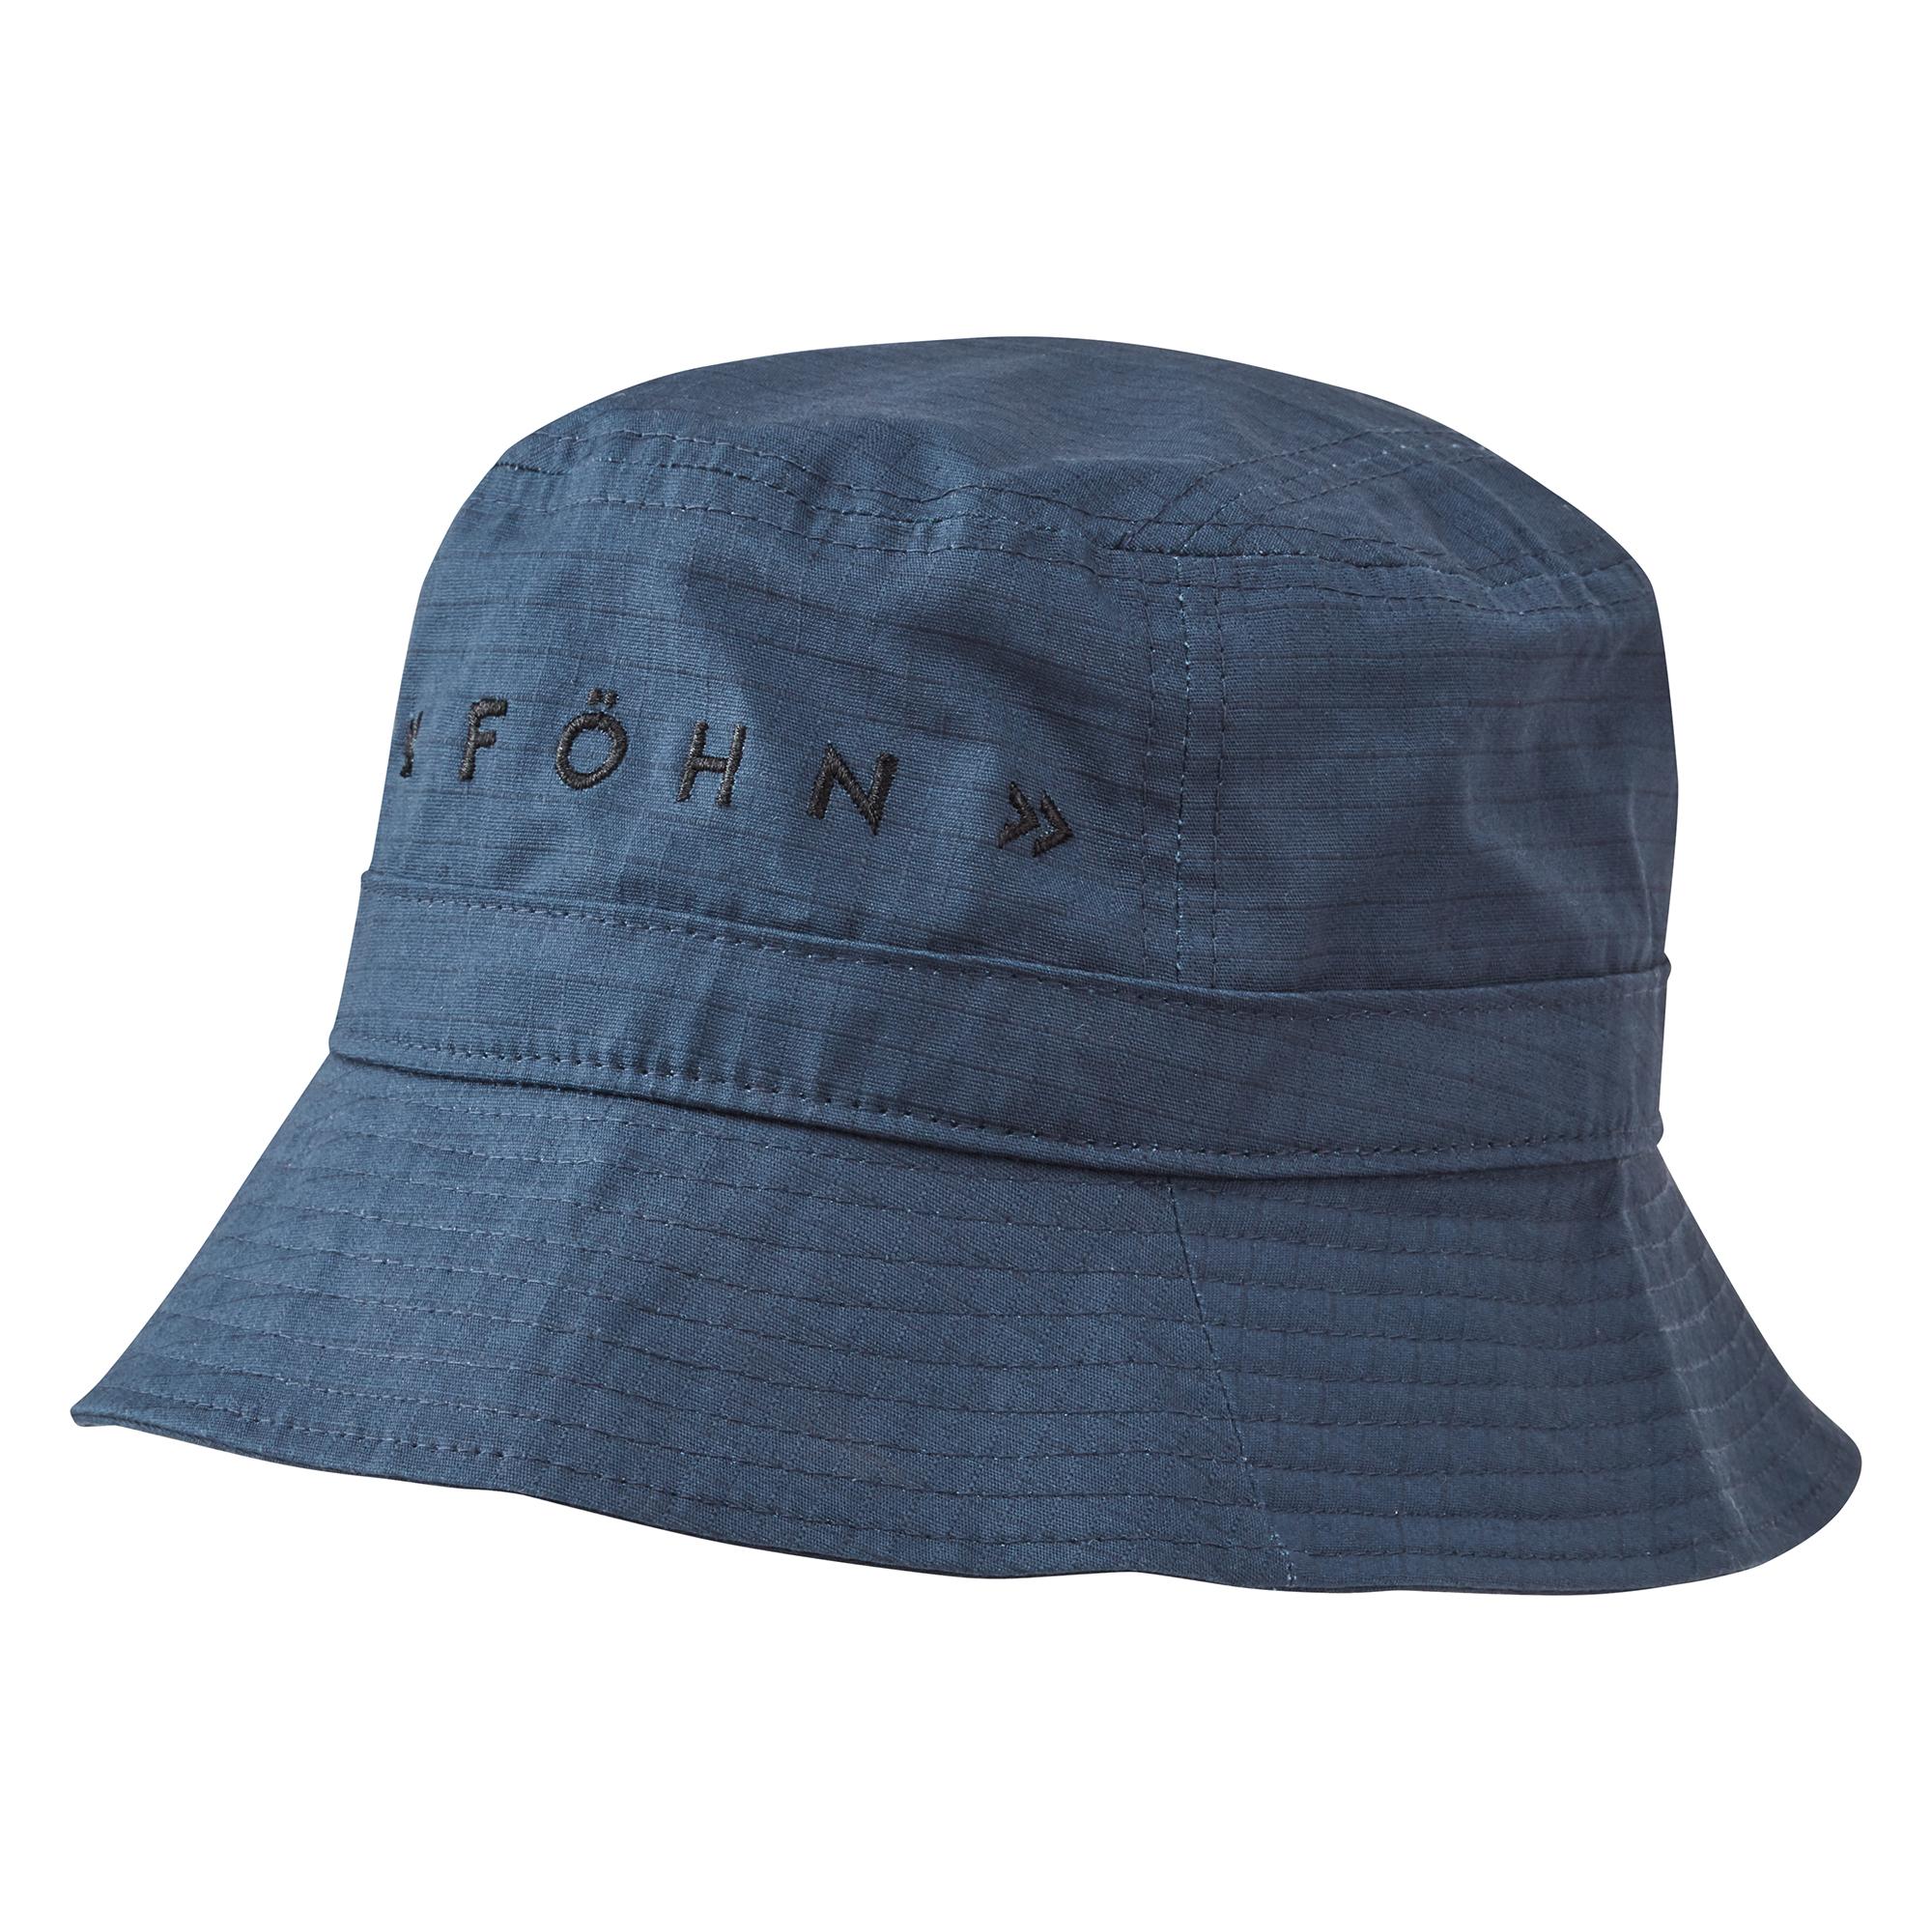 Fhn Bucket Hat - Navy